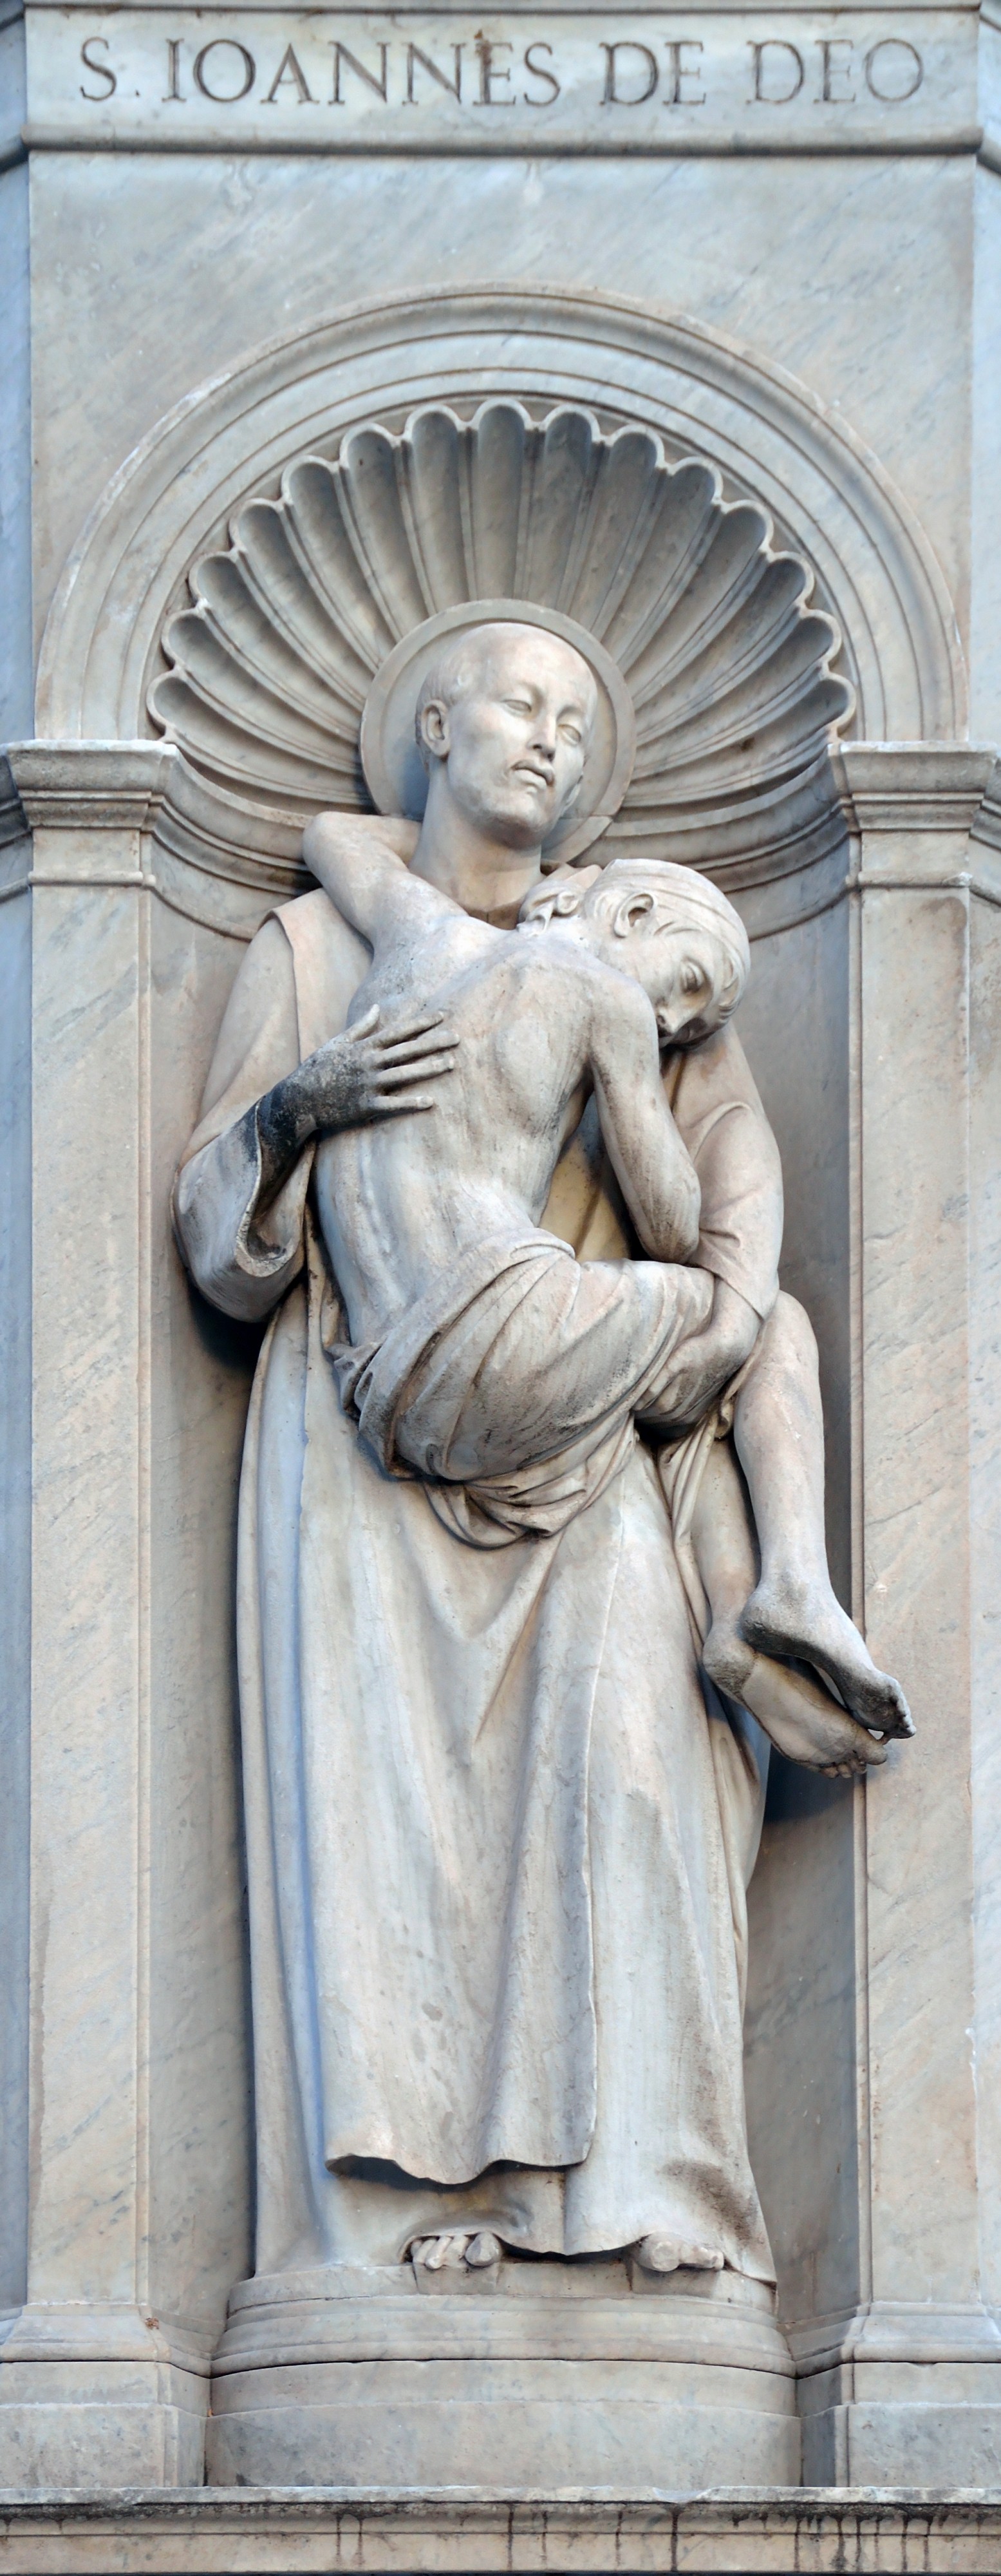 Statue of John of God in Rome